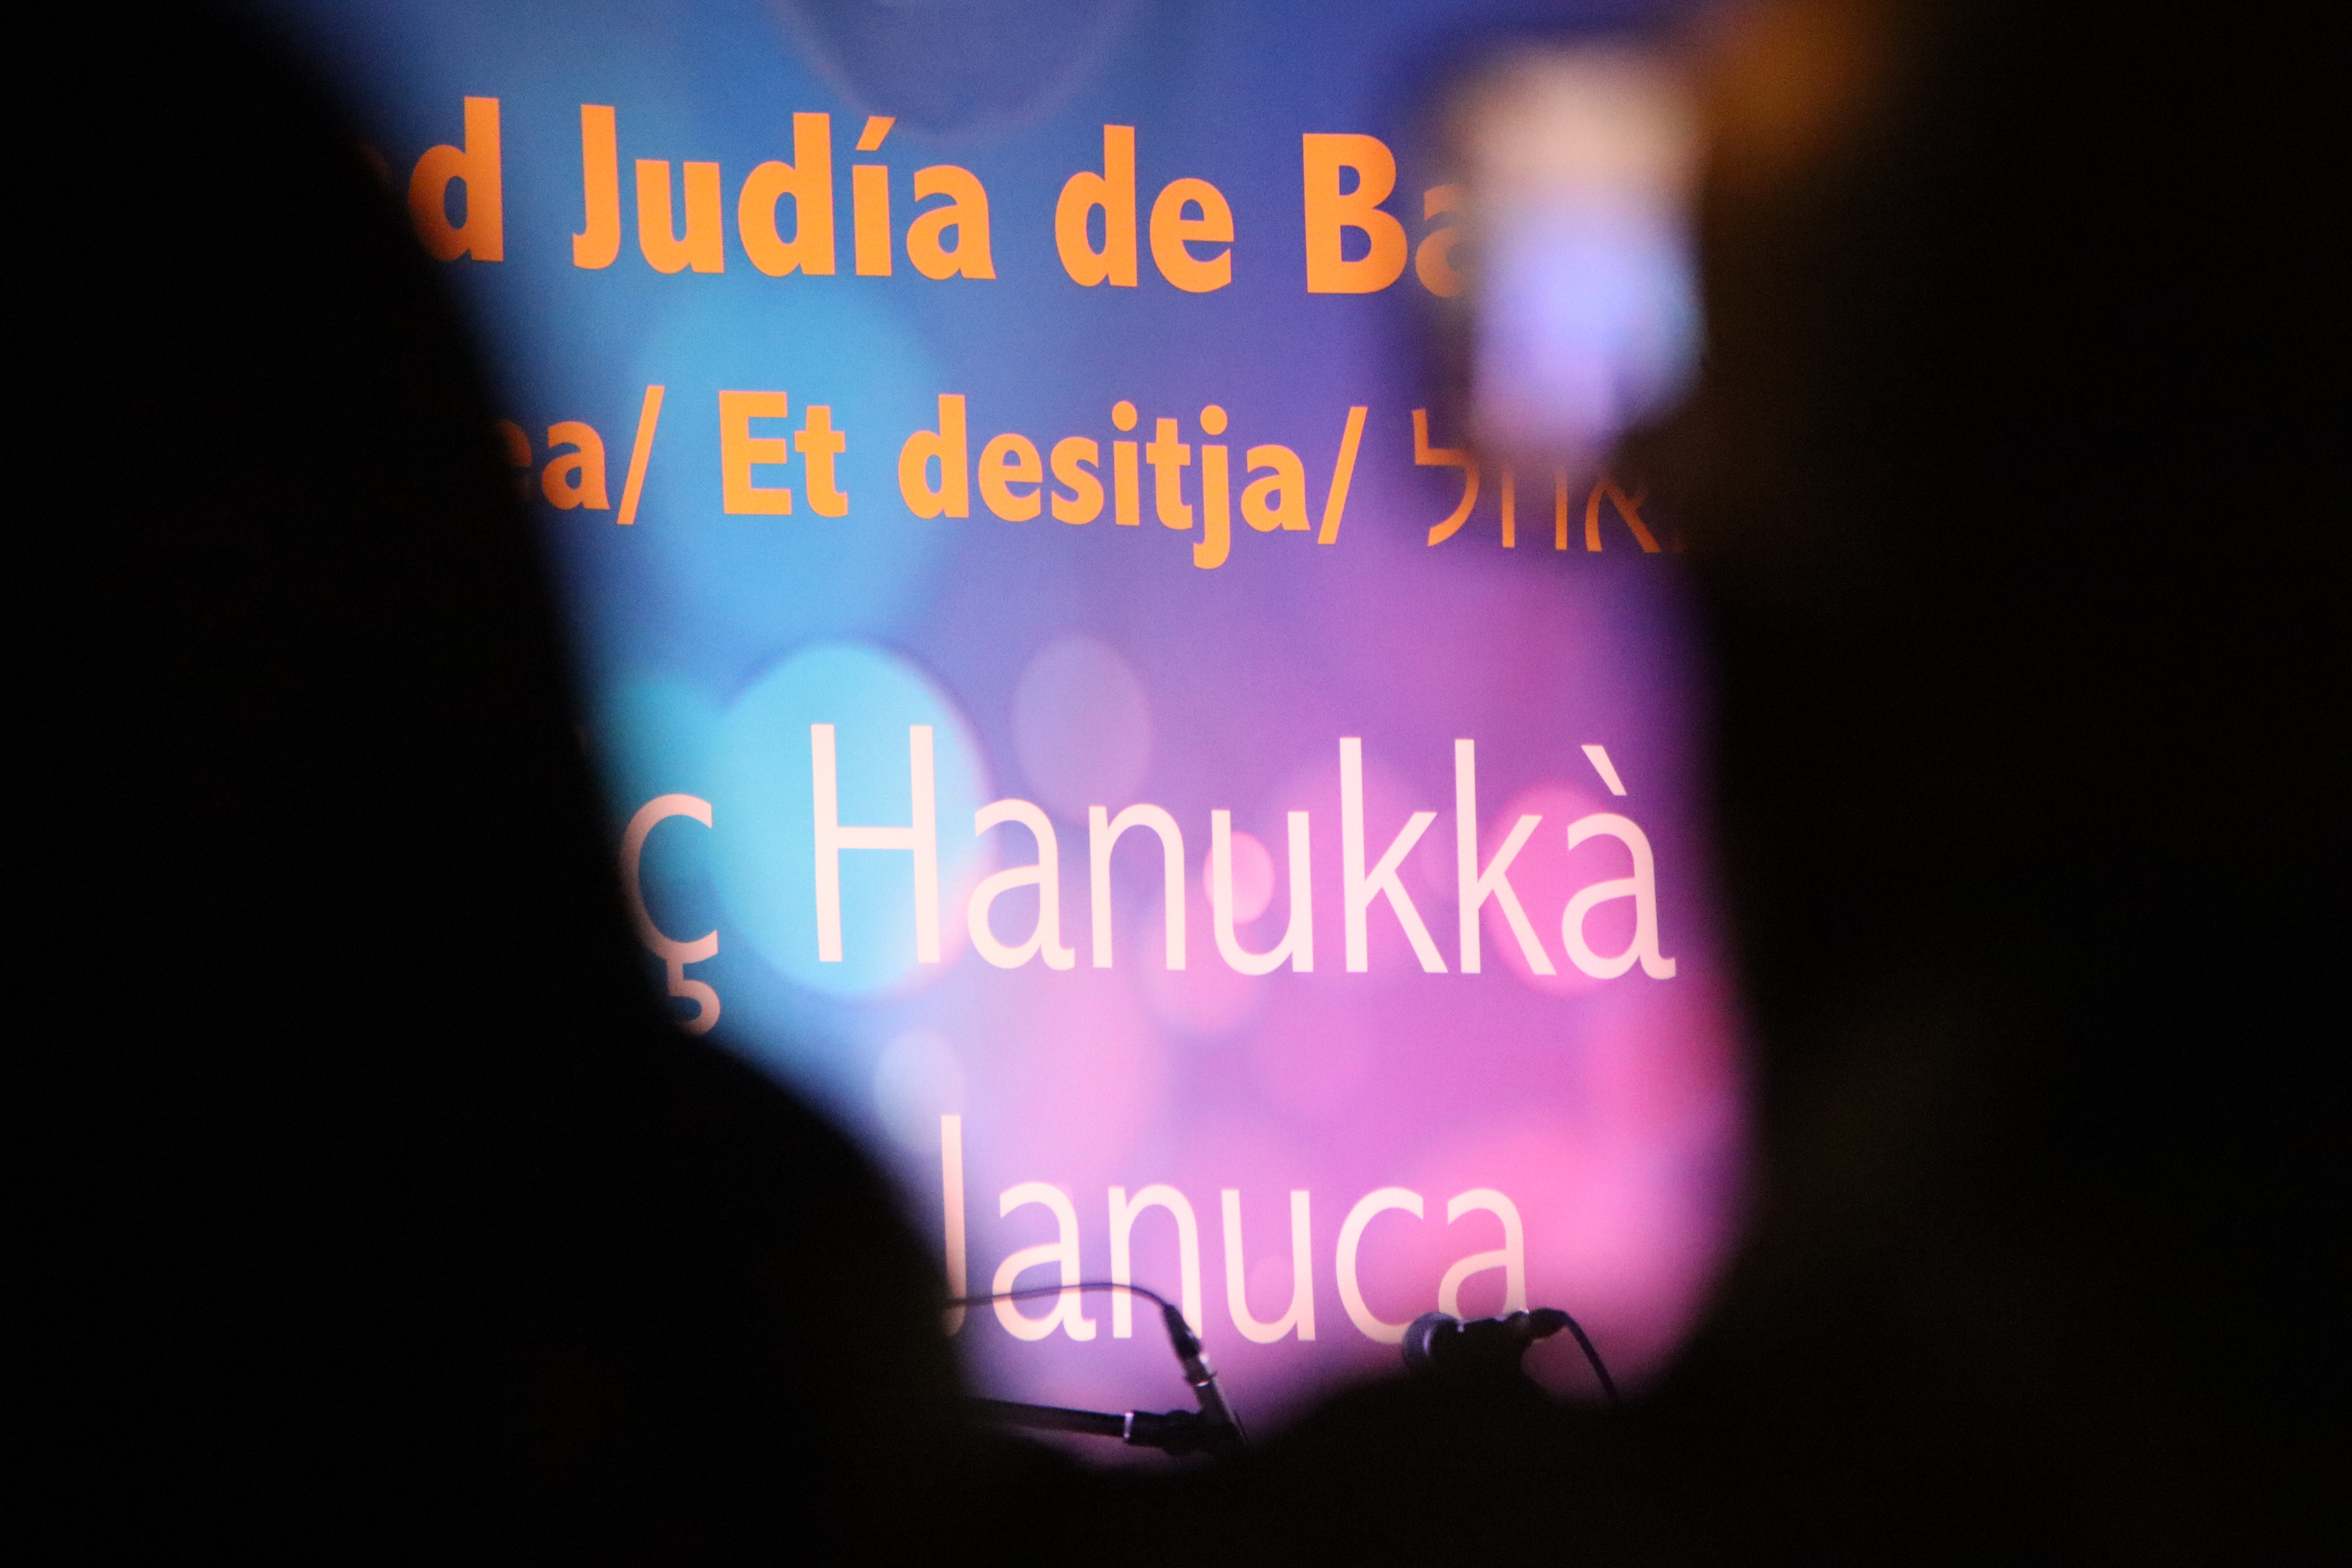 Hanukkah celebration in Sant Jaume square